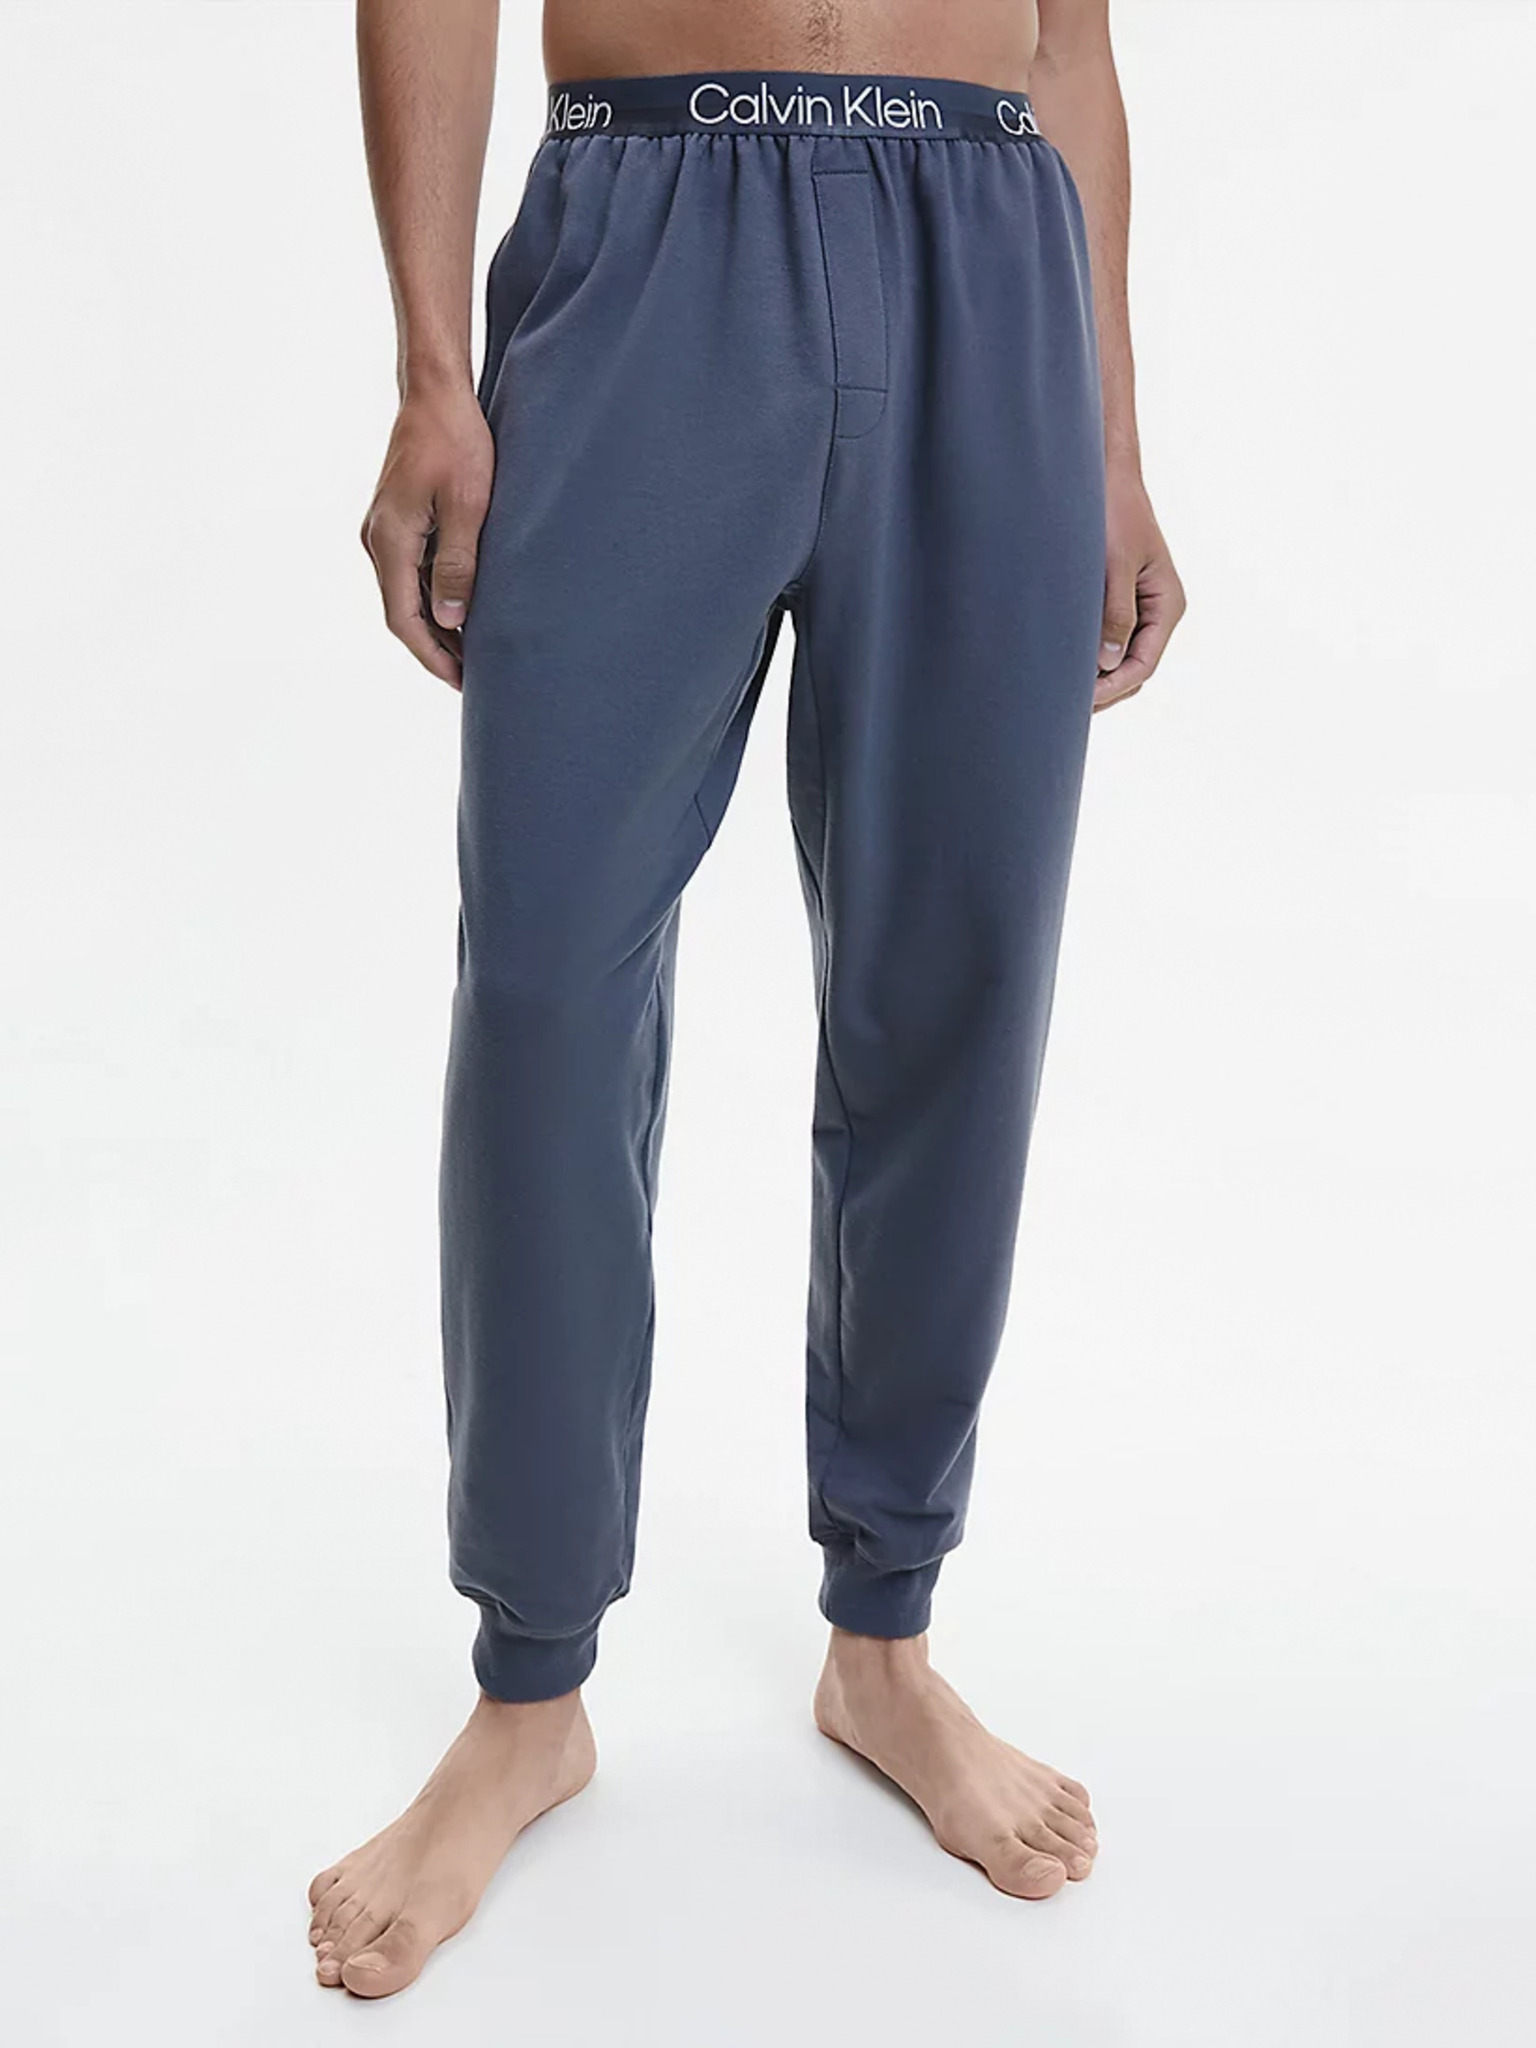 Underwear Sleeping - Calvin Klein pants